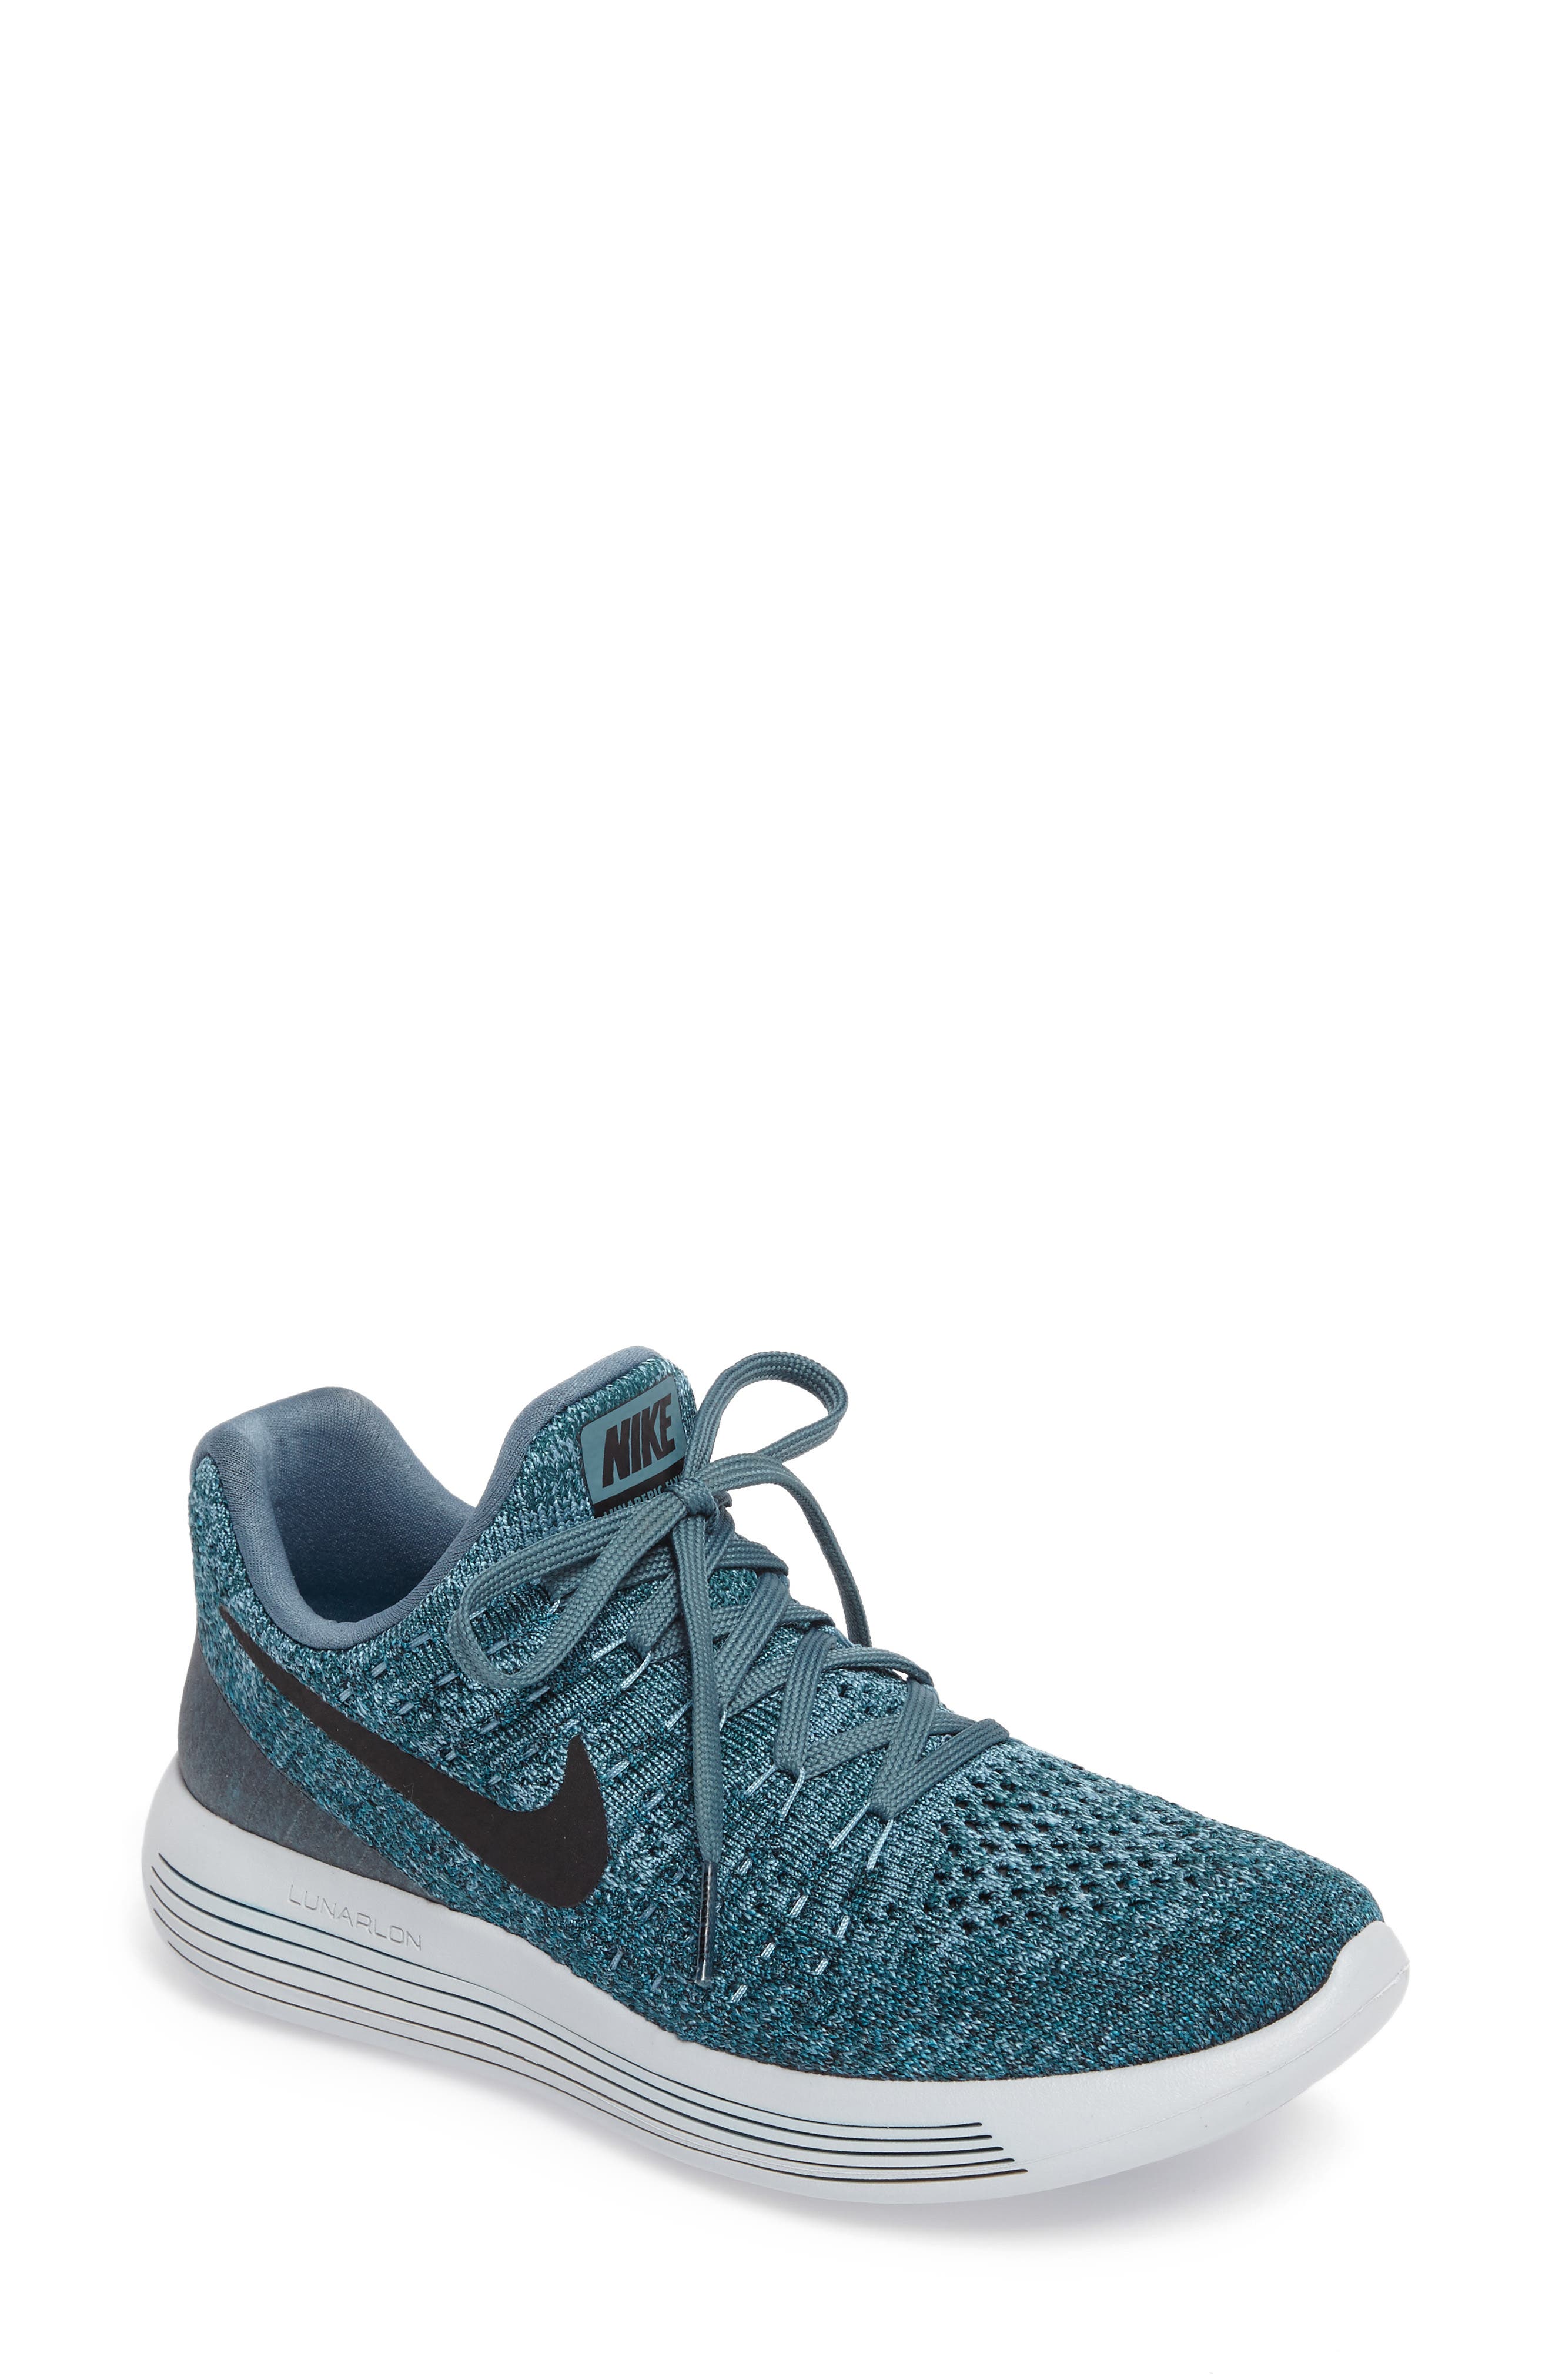 Main Image - Nike LunarEpic Low Flyknit 2 Running Shoe (Women)